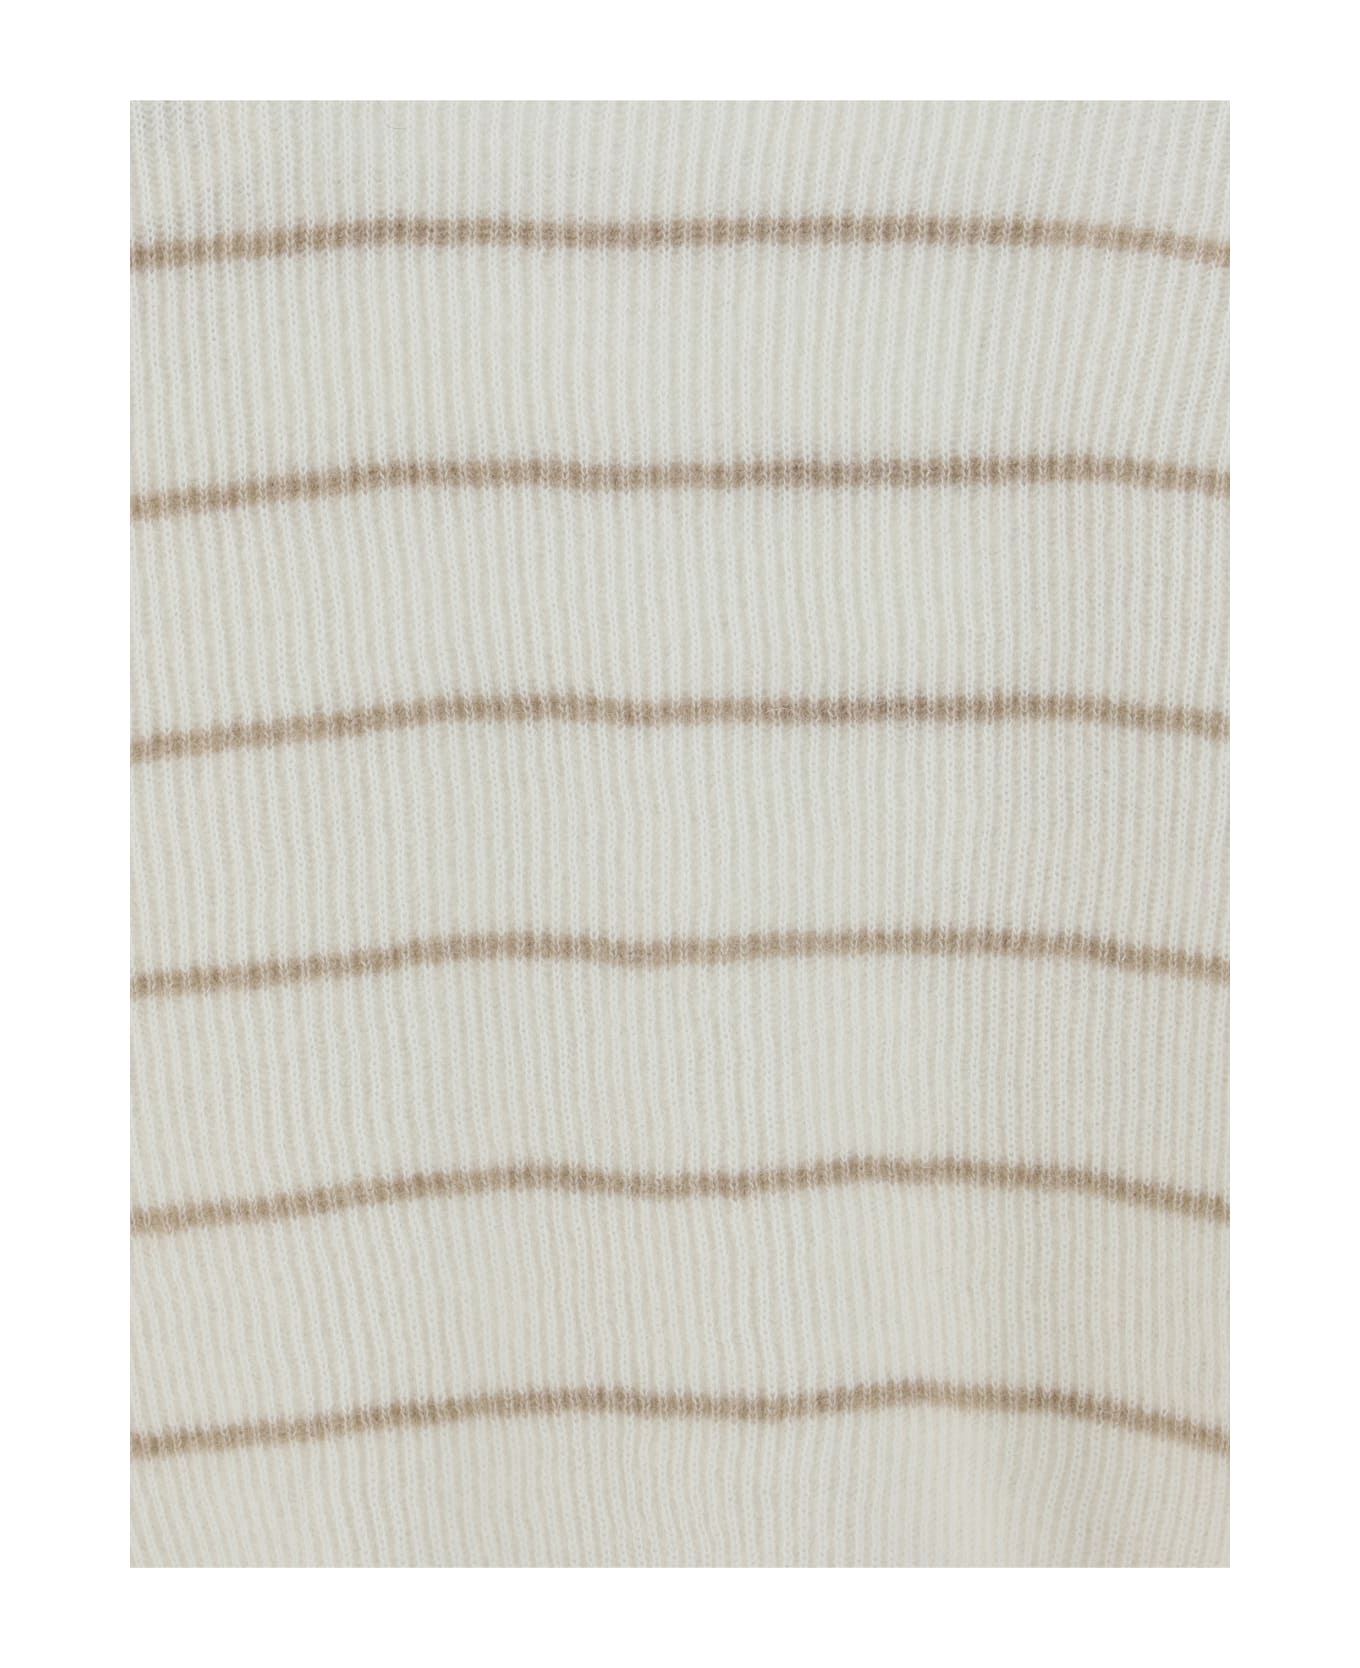 Brunello Cucinelli Sweater - Bianco+soft Stone ニットウェア